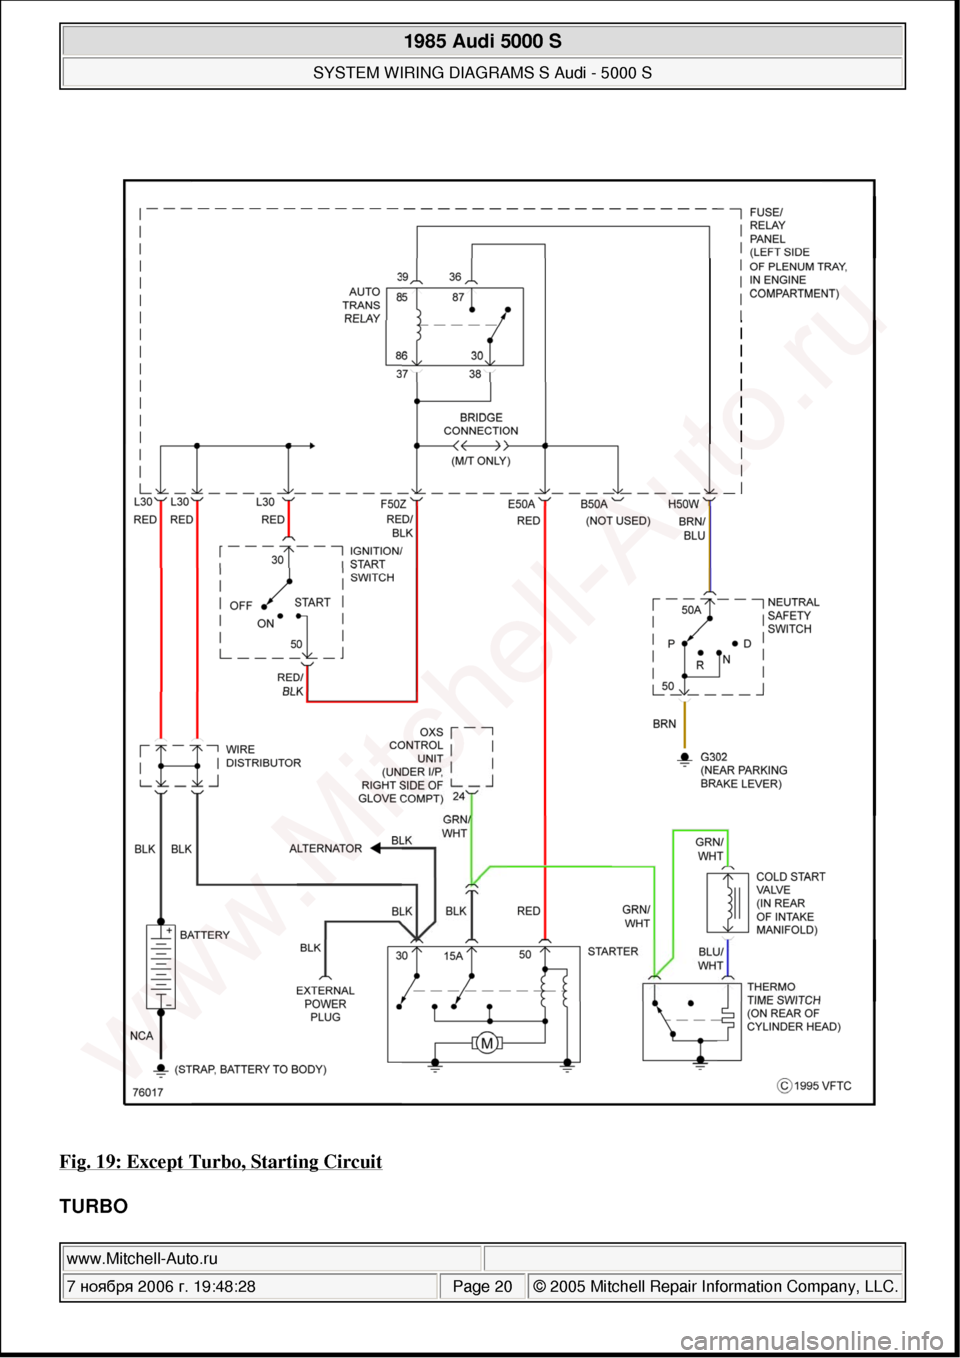 AUDI 5000S 1985 C2 System Wiring Diagram 
Fig. 19: Except Turbo, Starting Circuit 
TURBO 
 
1985 Audi 5000 S 
SYSTEM WIRING DIAGRAMS S Audi - 5000 S  
www.Mitchell-Auto.ru  
7  ноября  2006 г. 19:48:28Page 20 © 2005 Mitchell Repair I